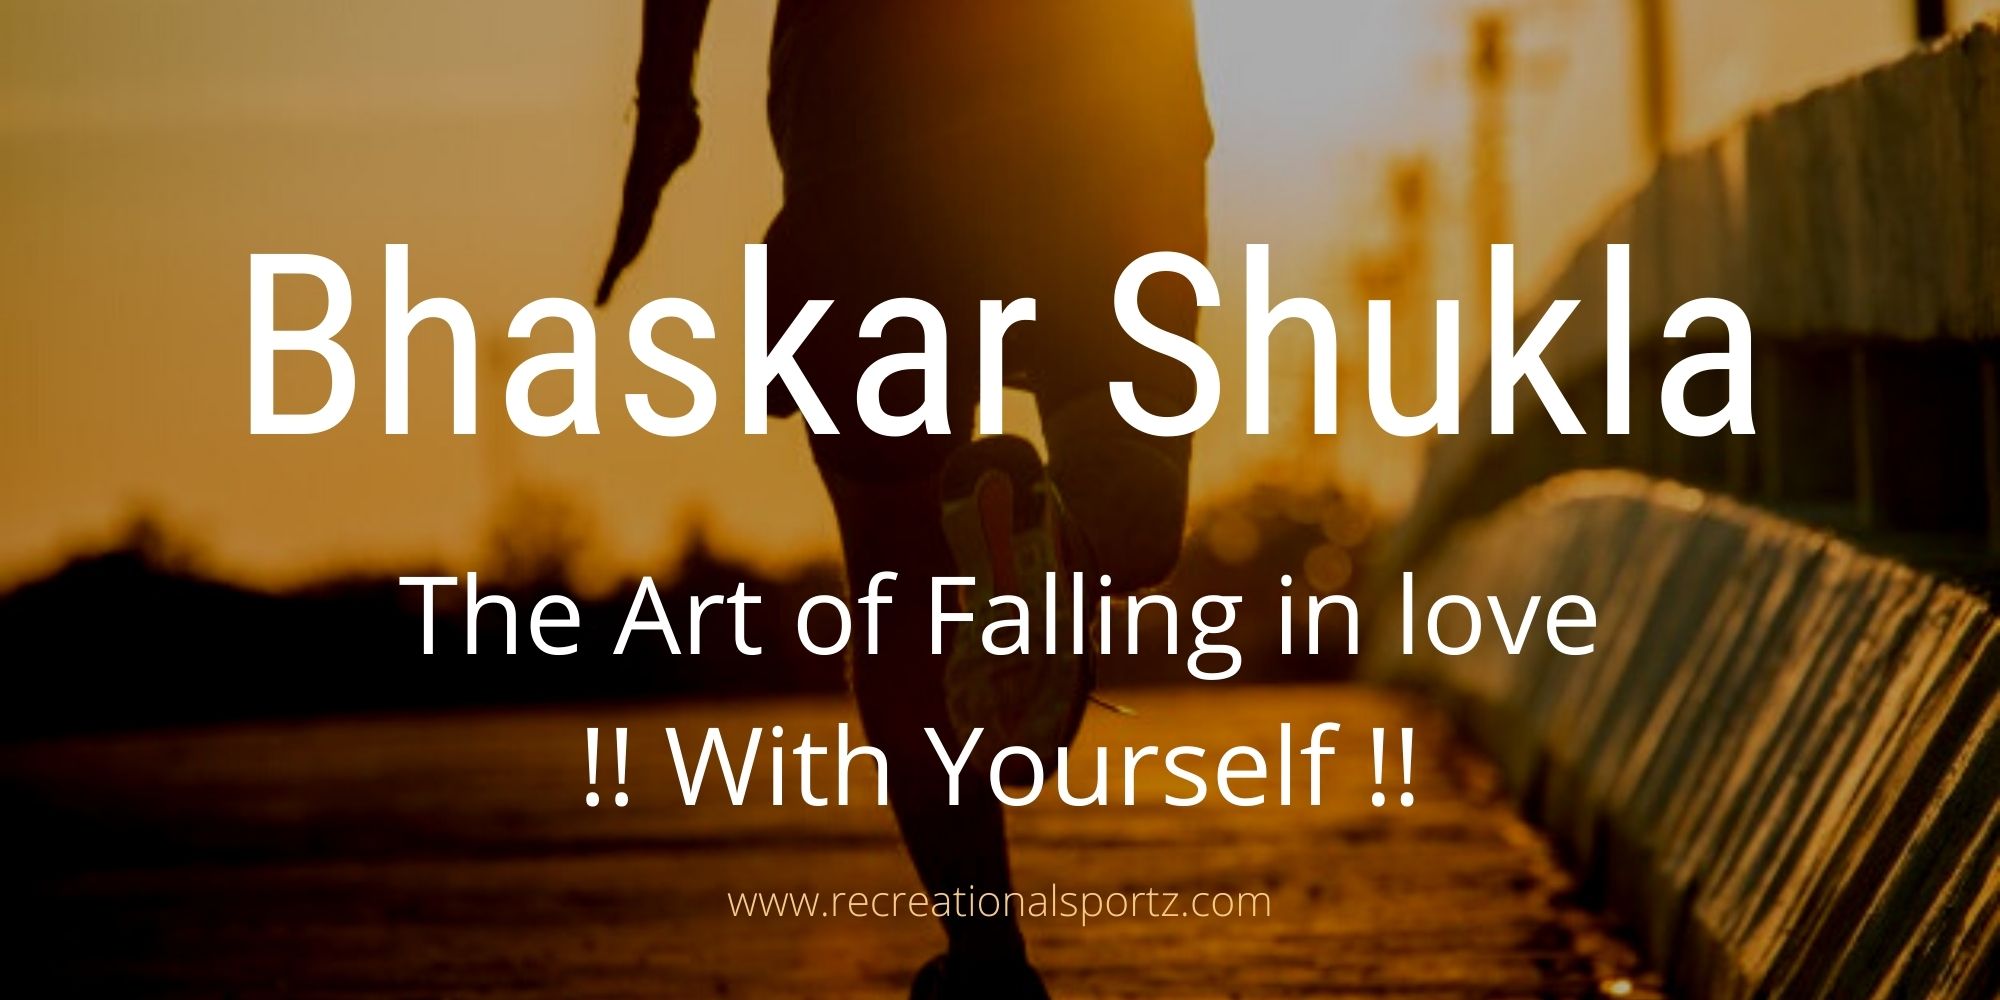 www.recreationalsportz.com/bhasker-shukla-the-art-of-loving-yourself/